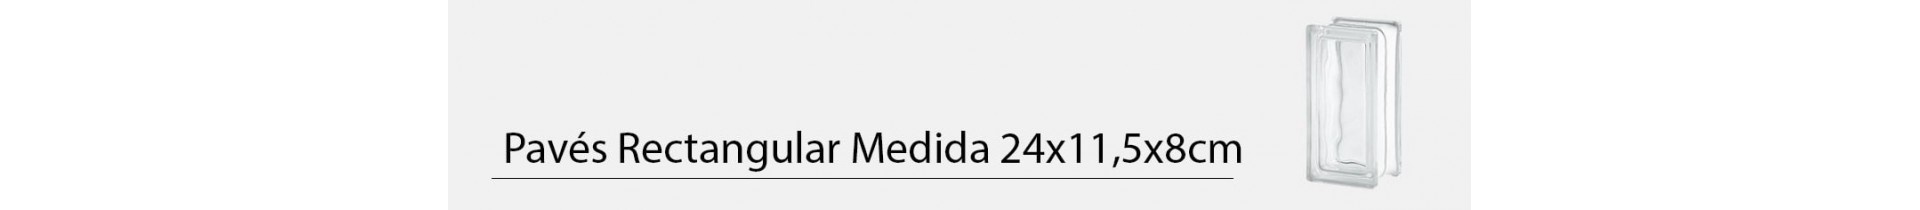 Pavés Rectangular Medida 24x11,5x8cm